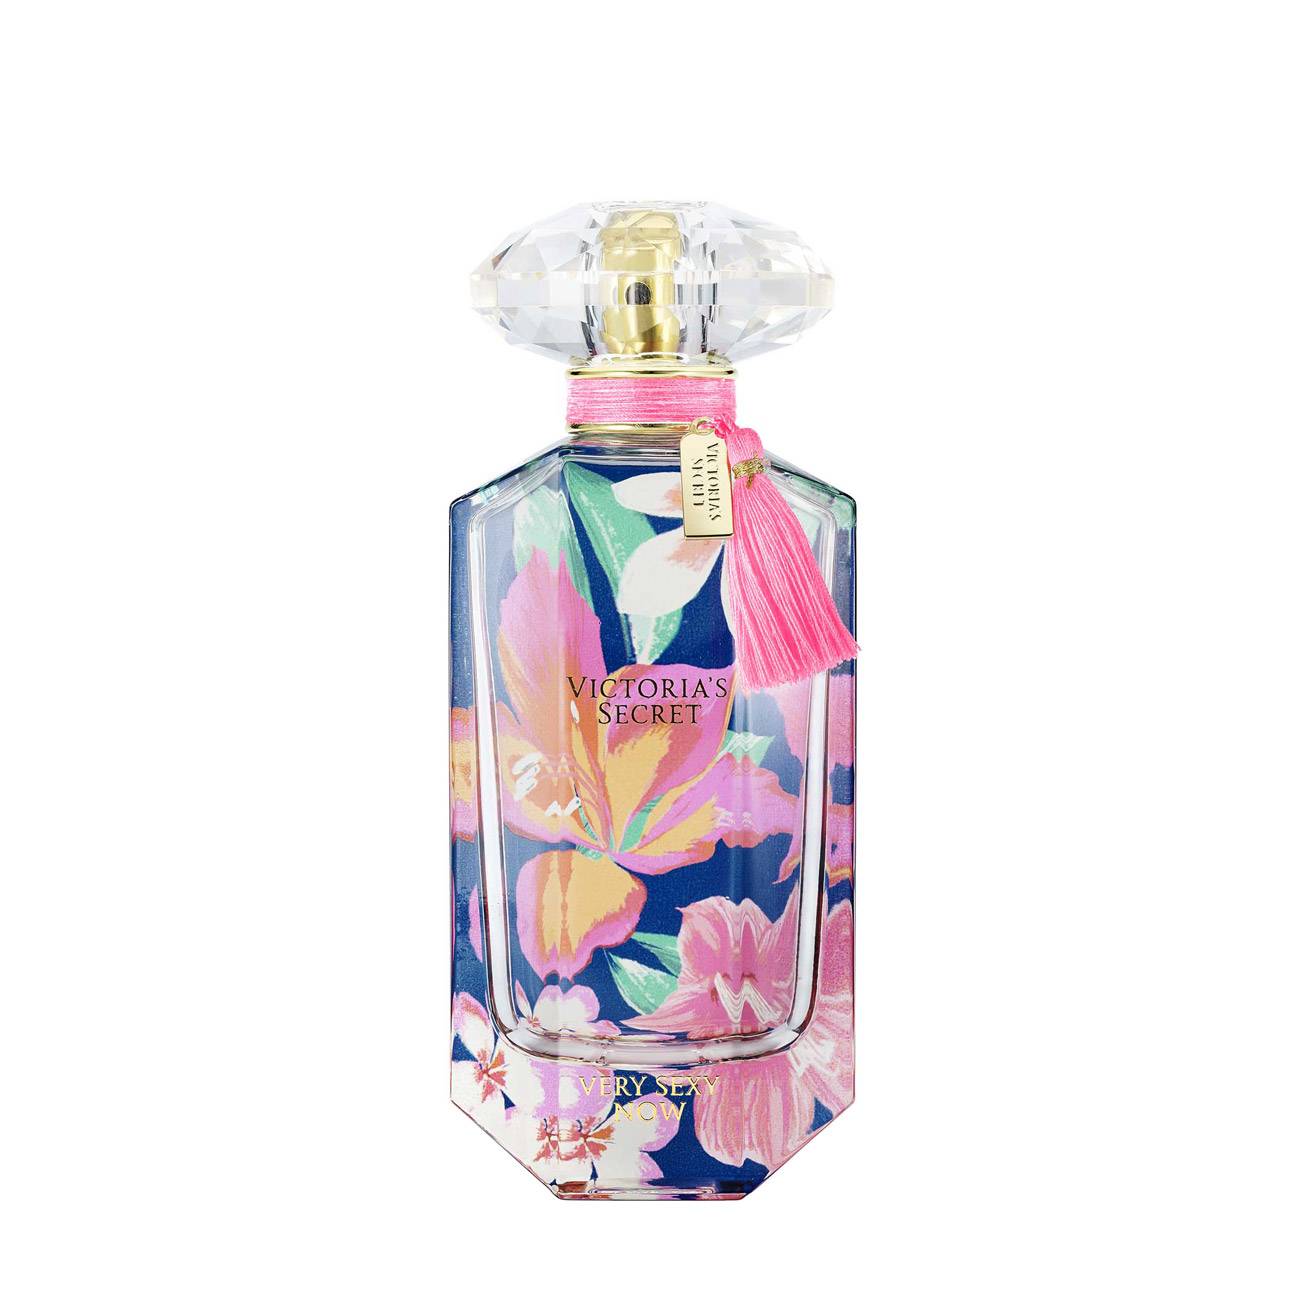 Apa de Parfum Default Brand VERY SEXY NOW 100ml cu comanda online